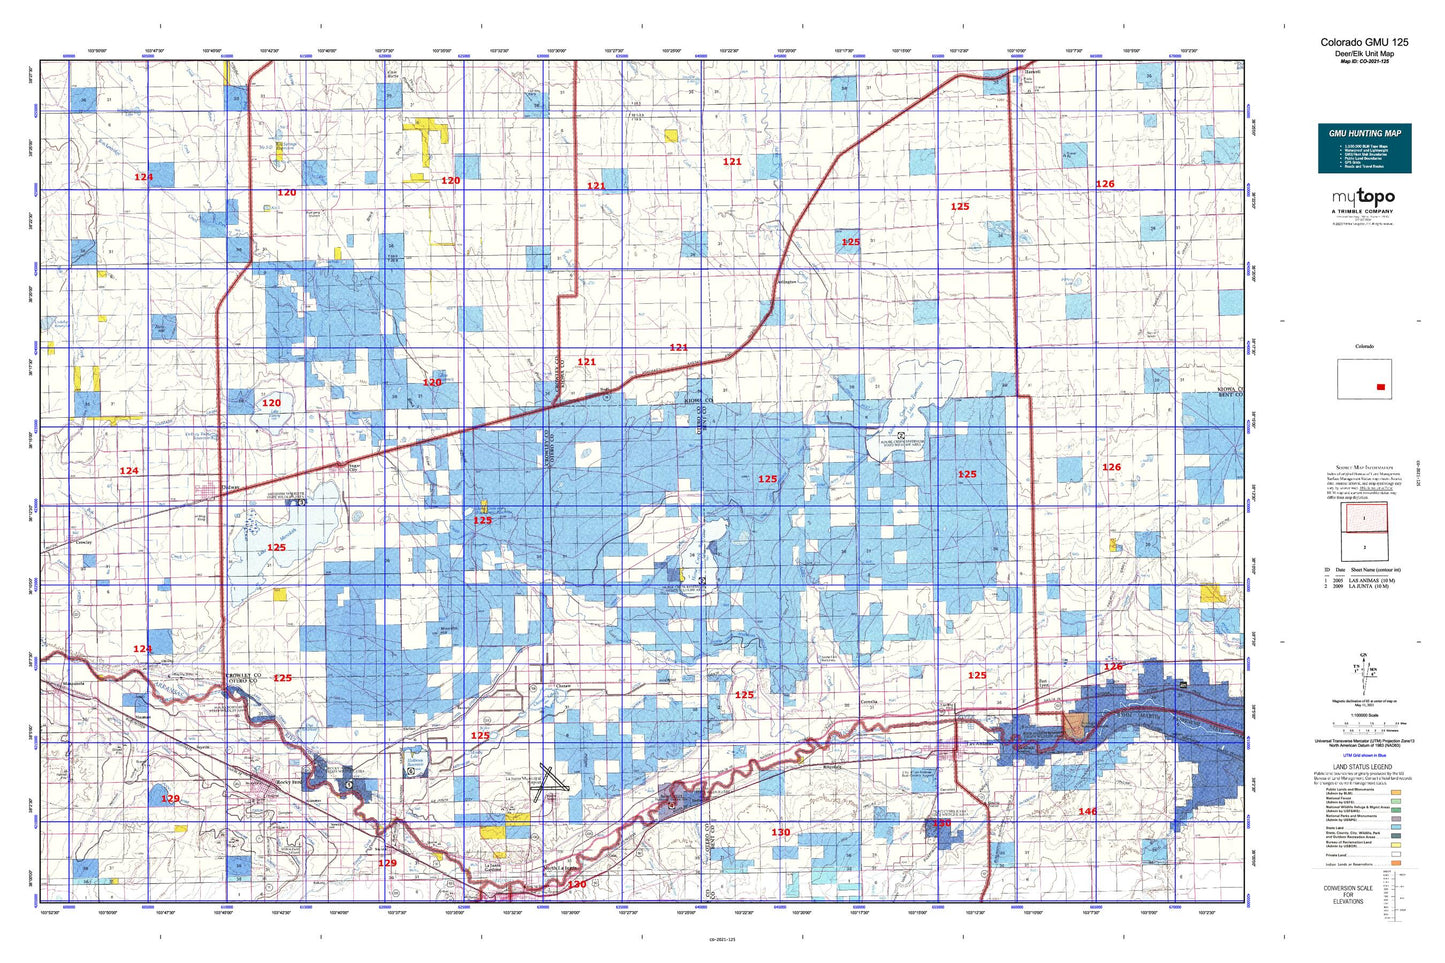 Colorado GMU 125 Map Image